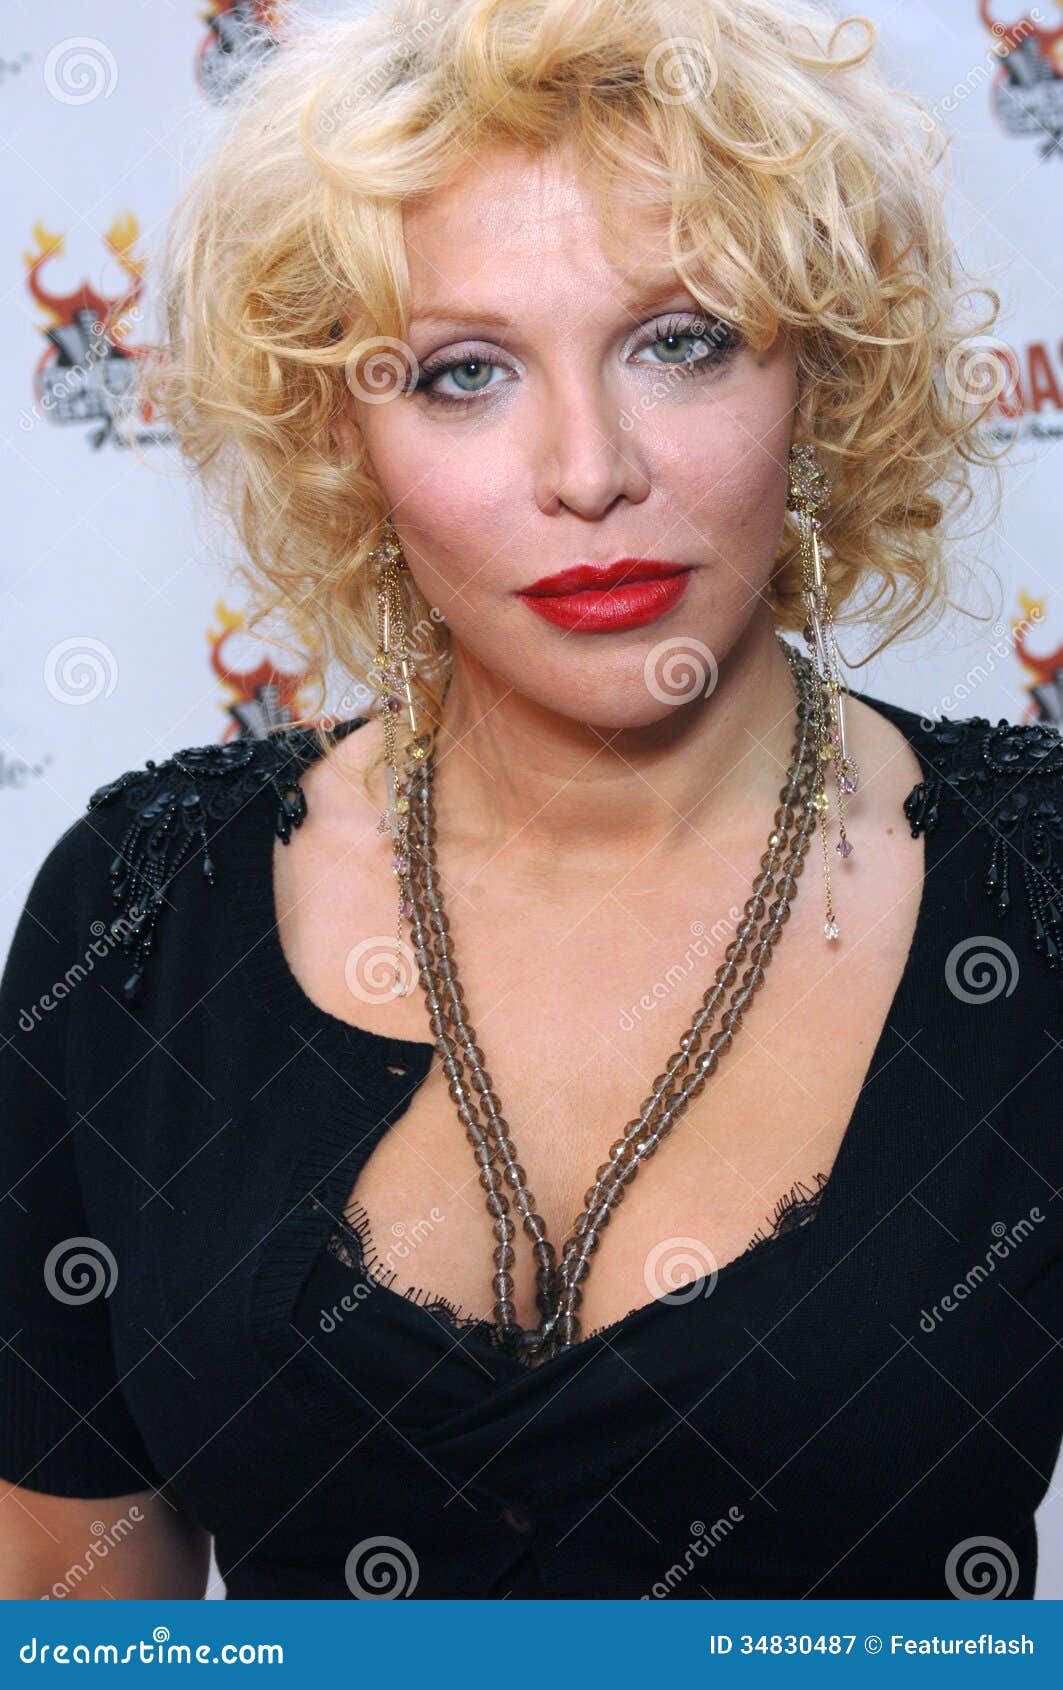 <b>Courtney Love</b>, Pamela Anderson Redaktionelles Stockfotografie - courtney-love-pamela-anderson-34830487